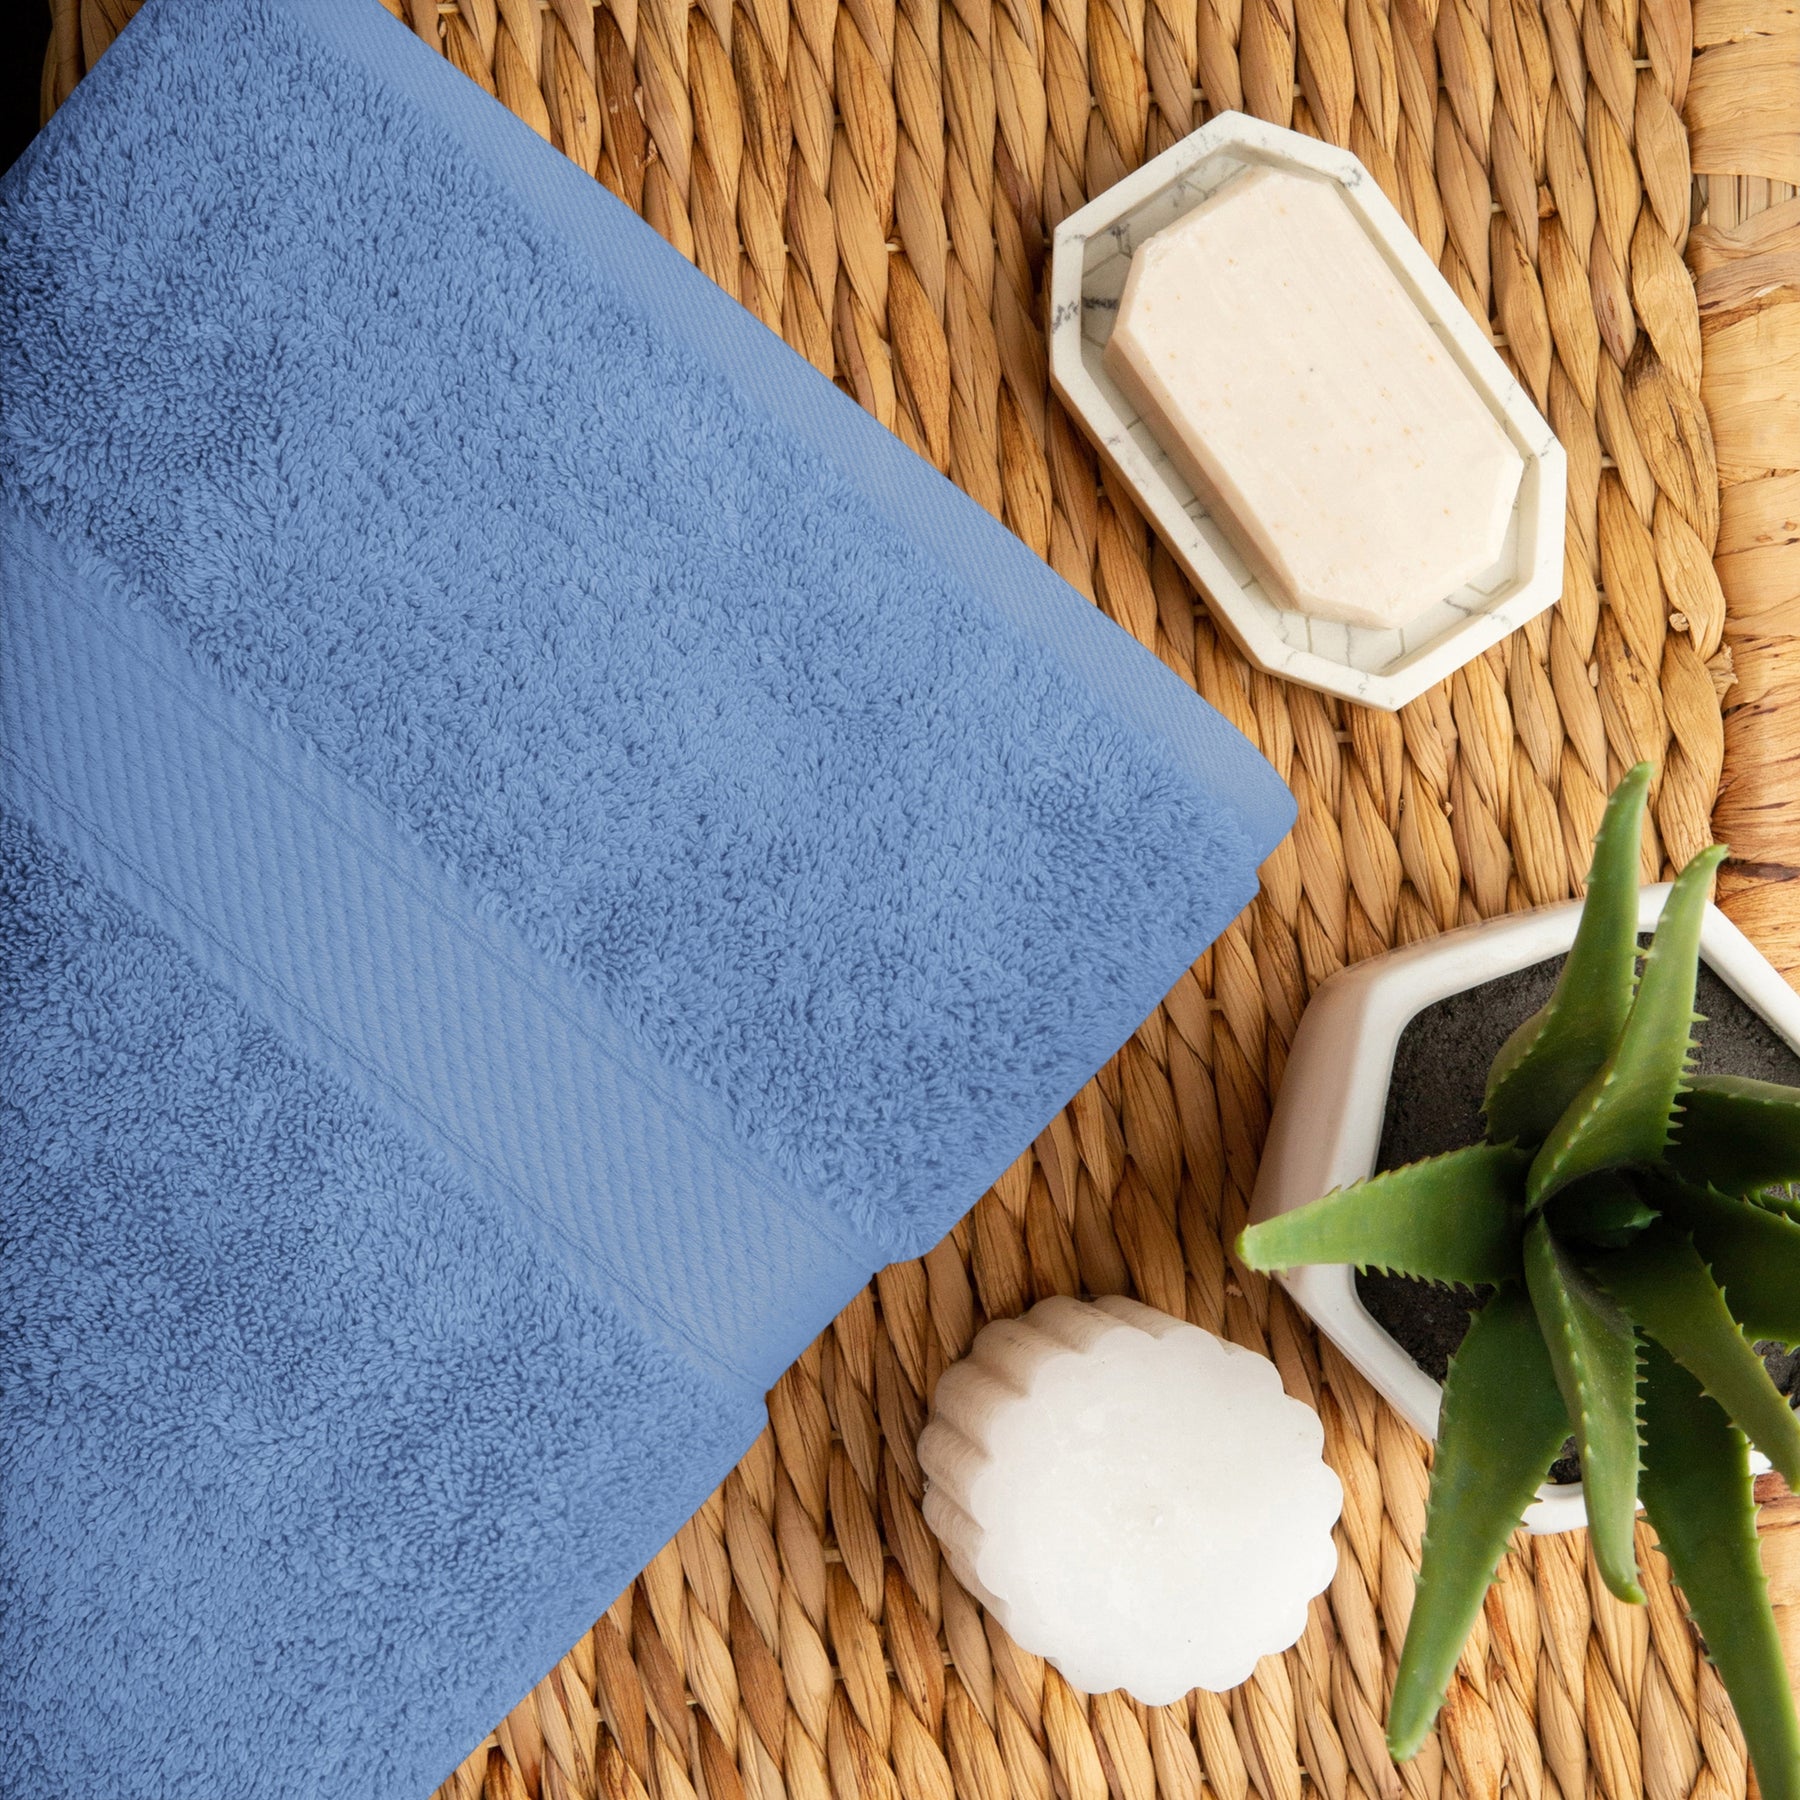 Egyptian Cotton Heavyweight 10 Piece Bath Towel Set - Denim Blue